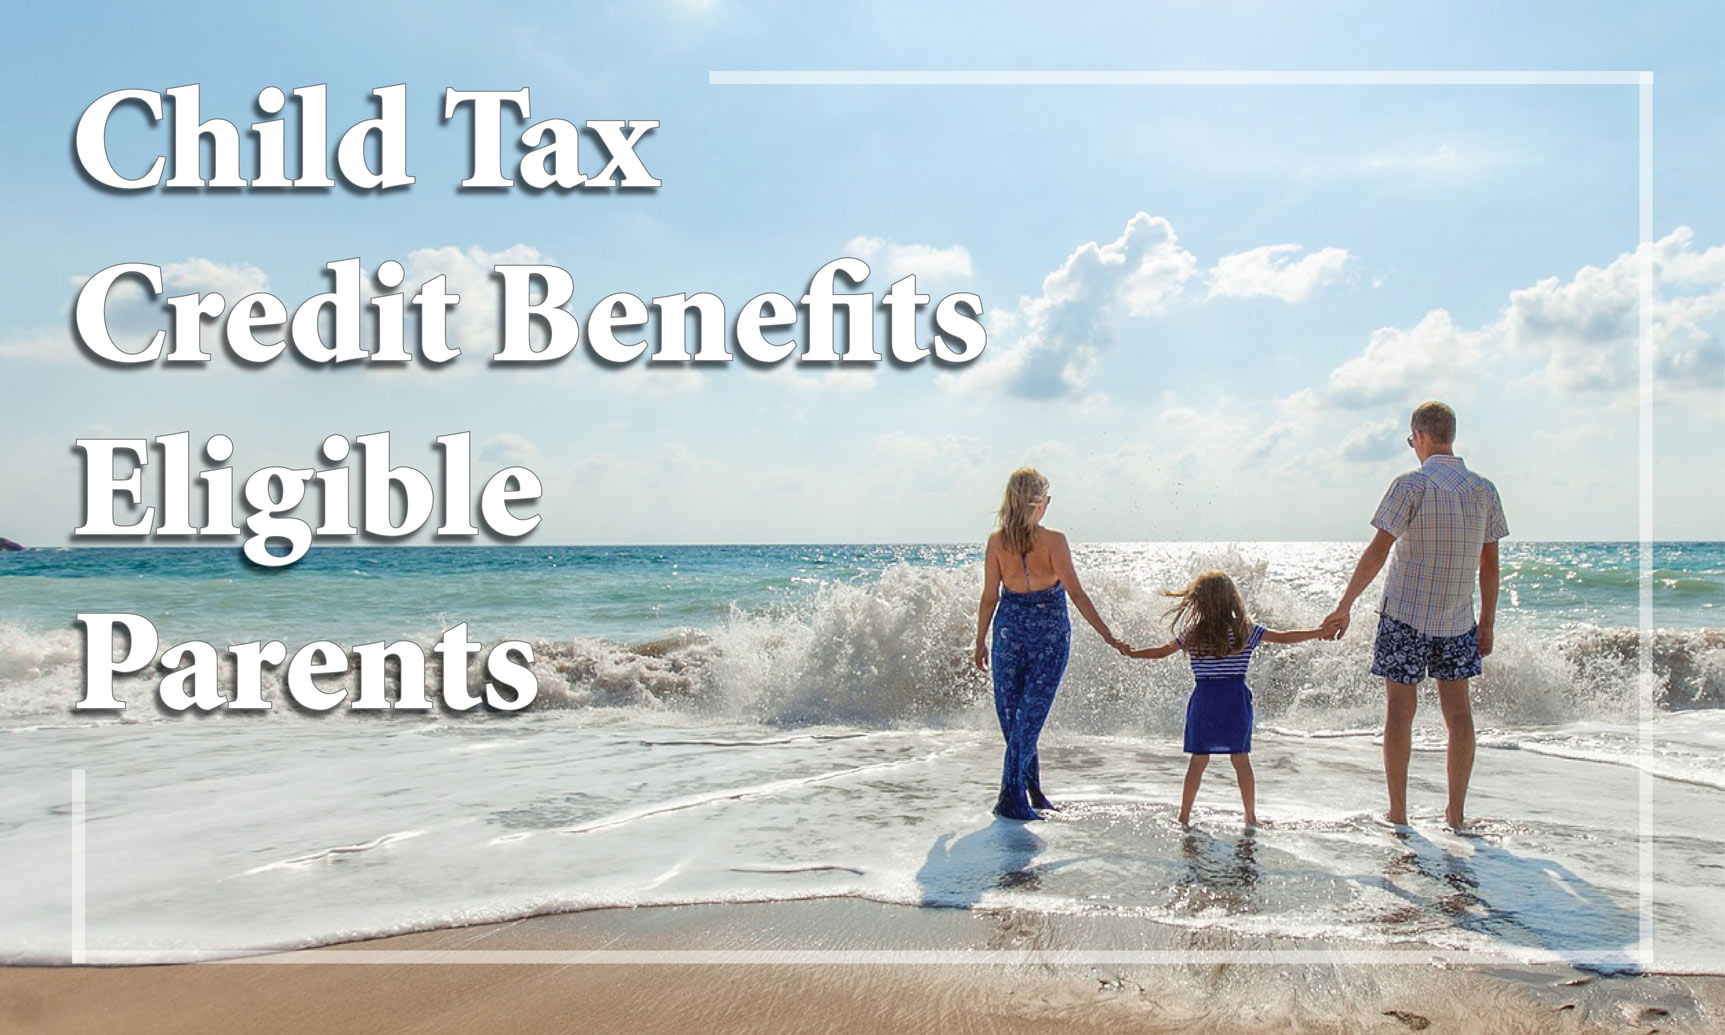 Child Tax Credit Benefits